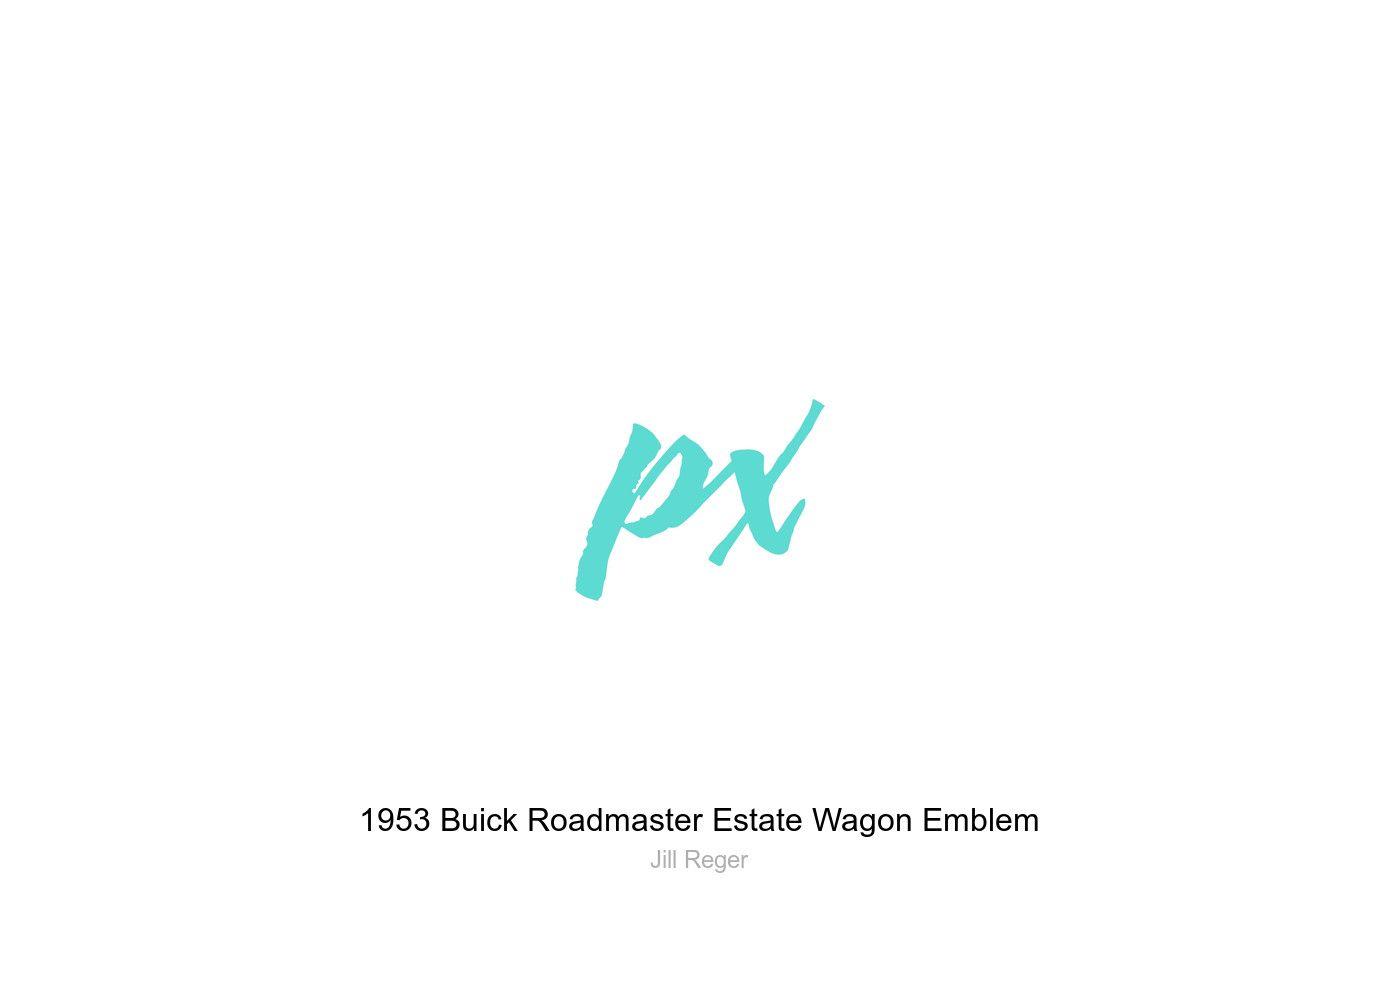 Roadmaster Logo - Buick Roadmaster Estate Wagon Emblem Greeting Card